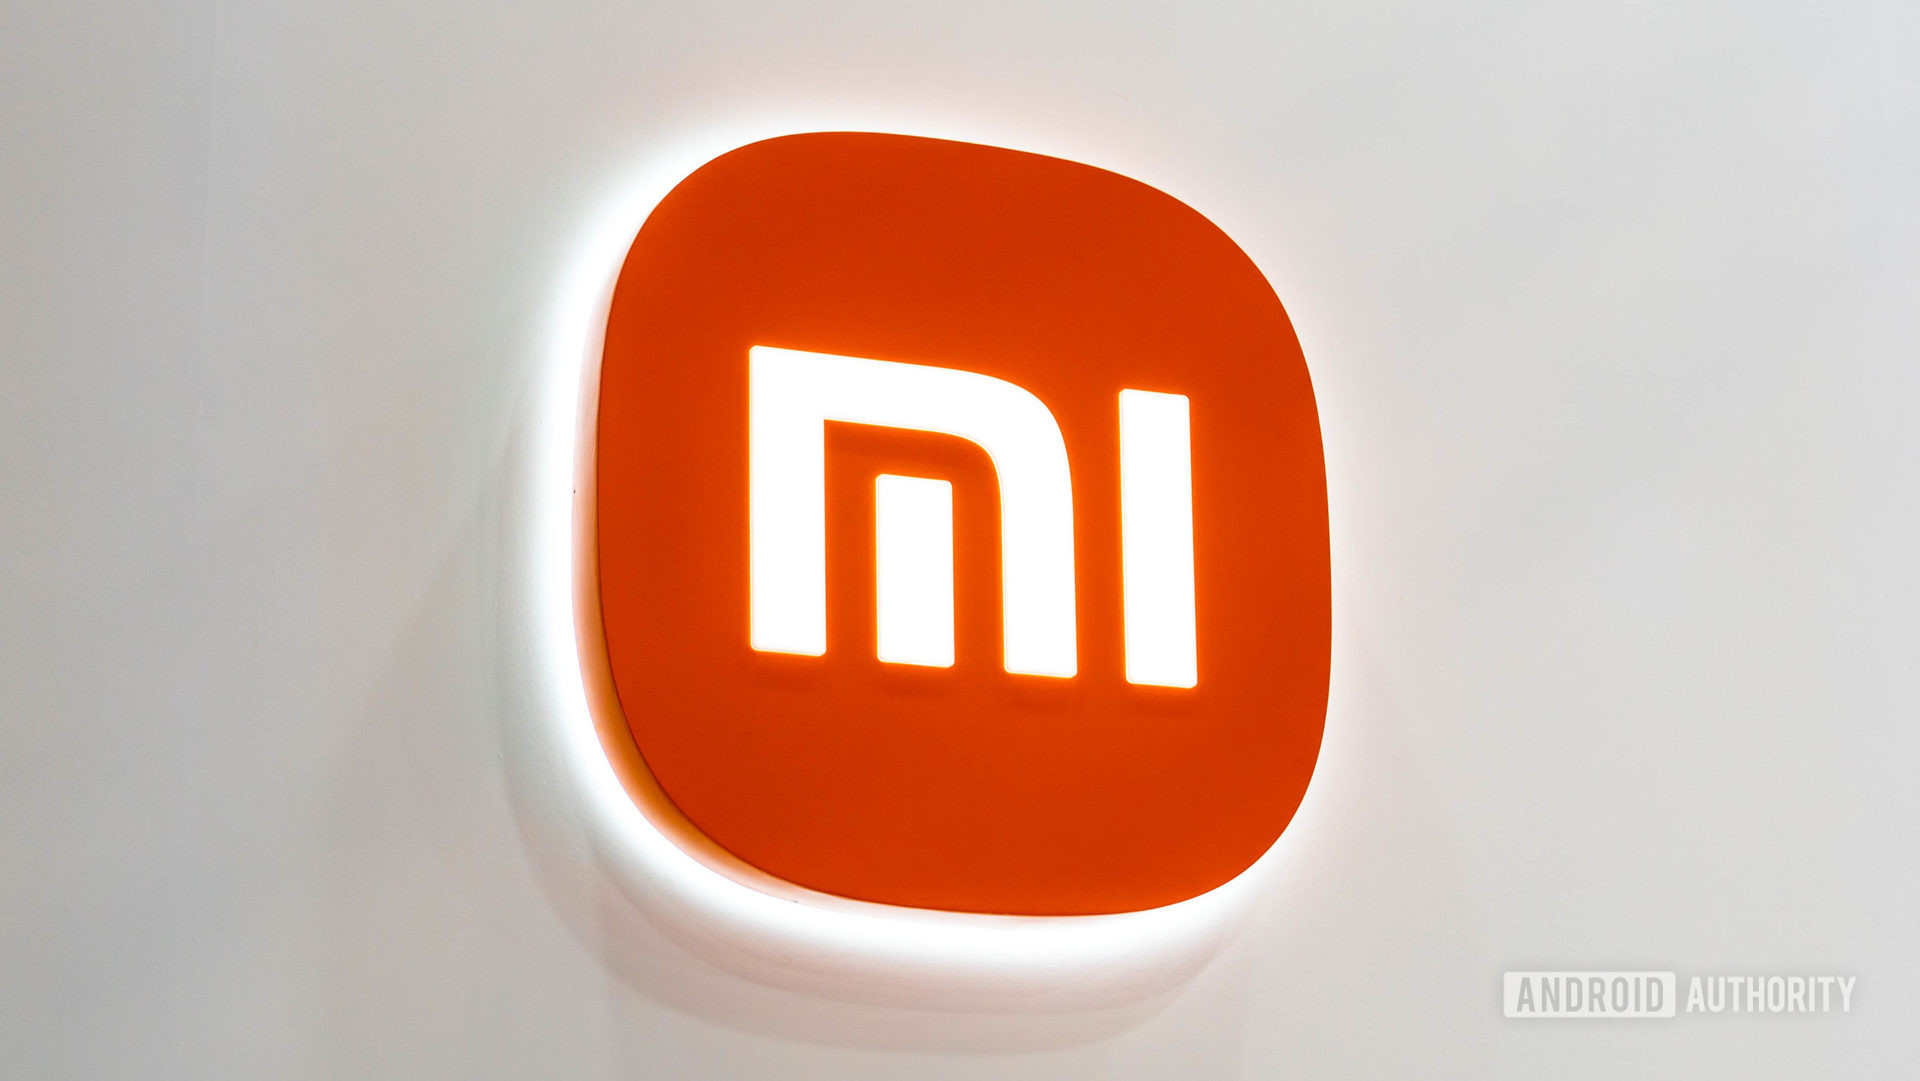 Beyaz duvarda Xiaomi Mi logosu